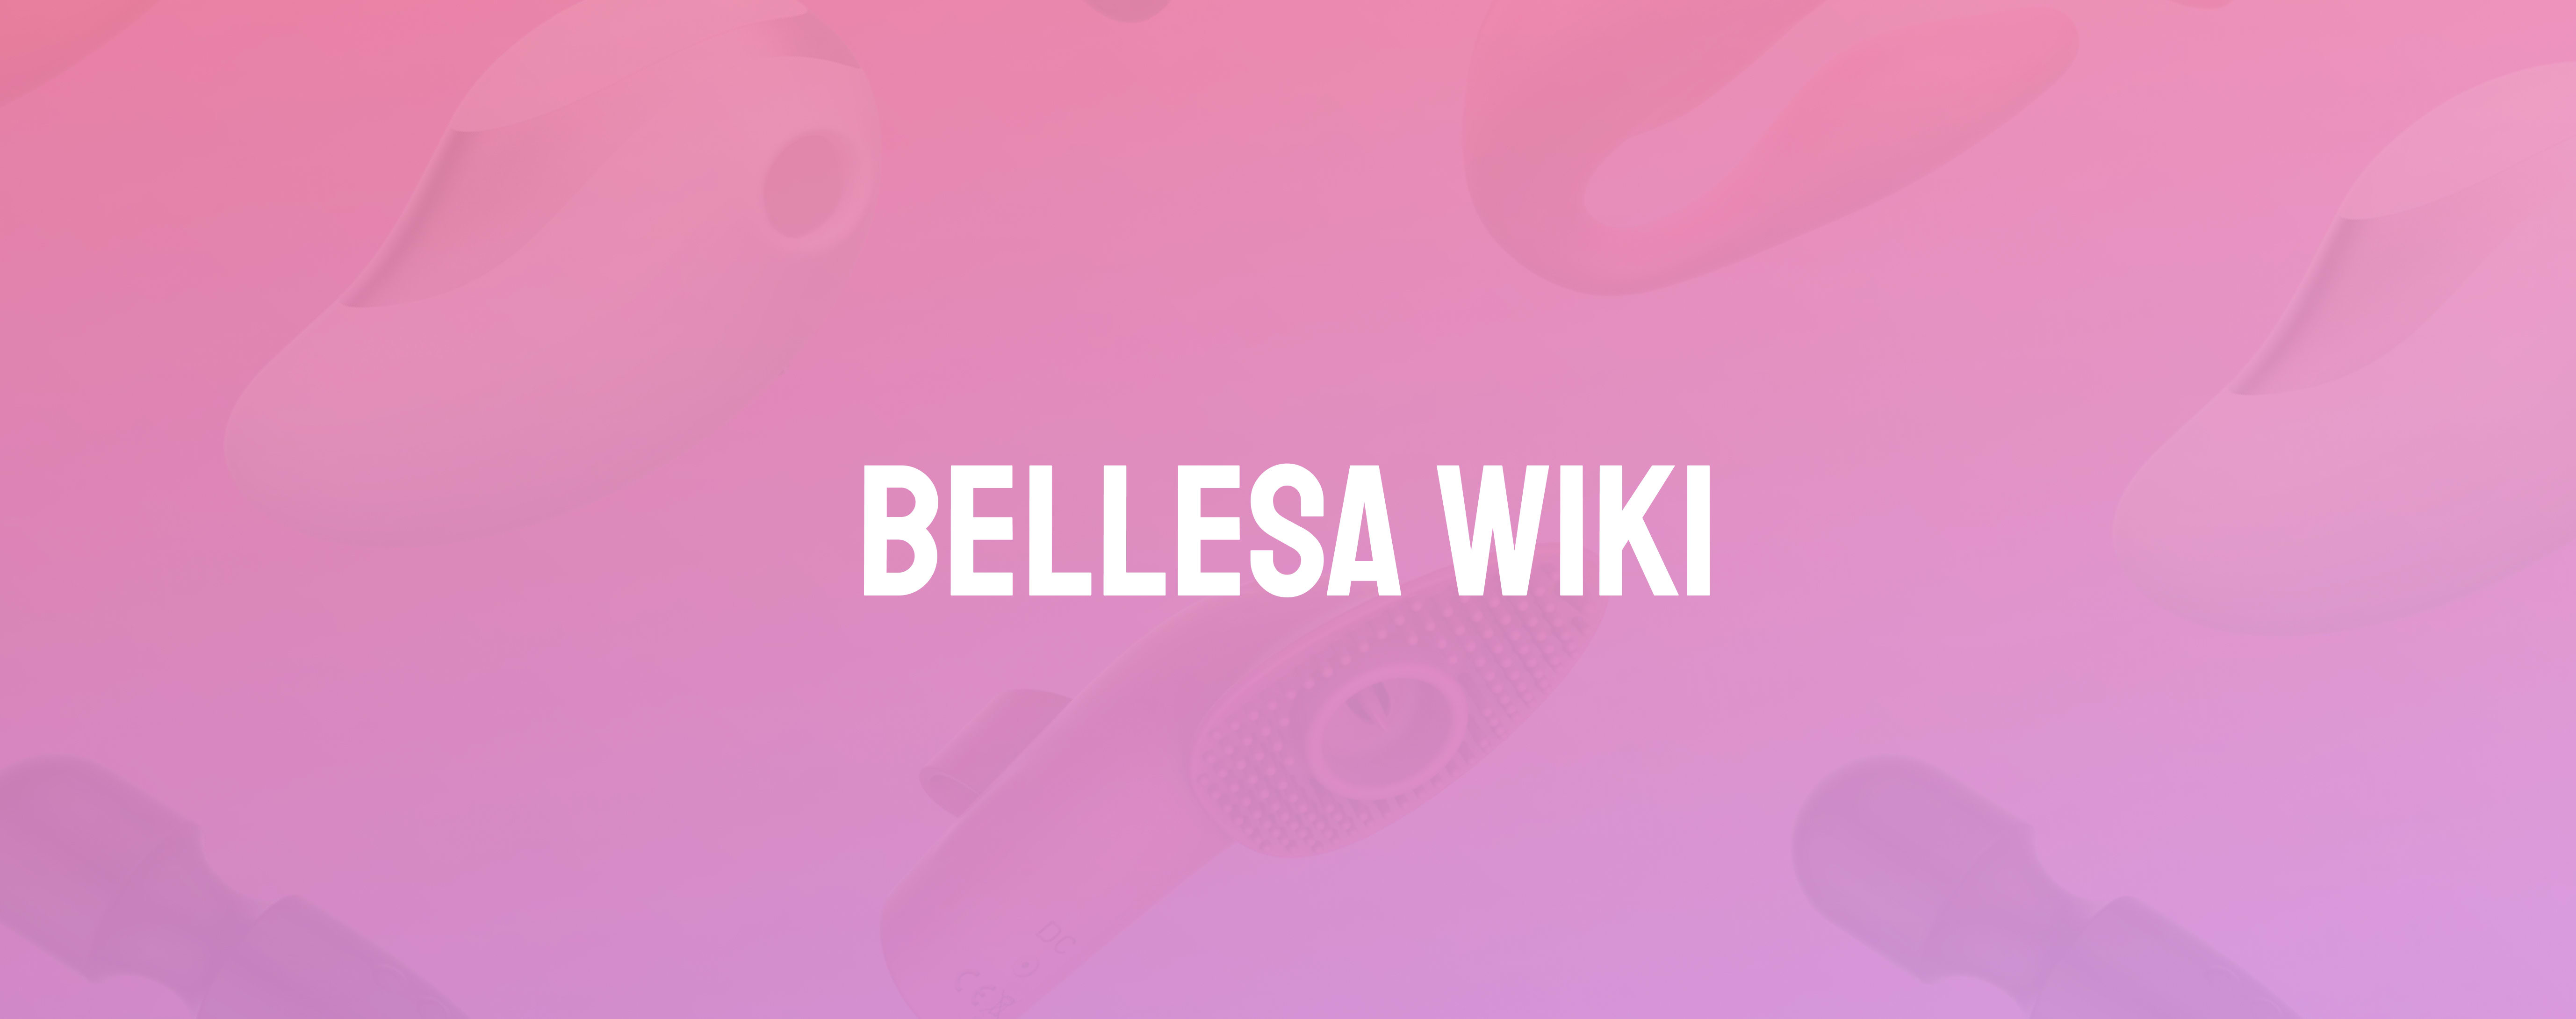 Group Sex - Bellesa Wiki Bellesa photo